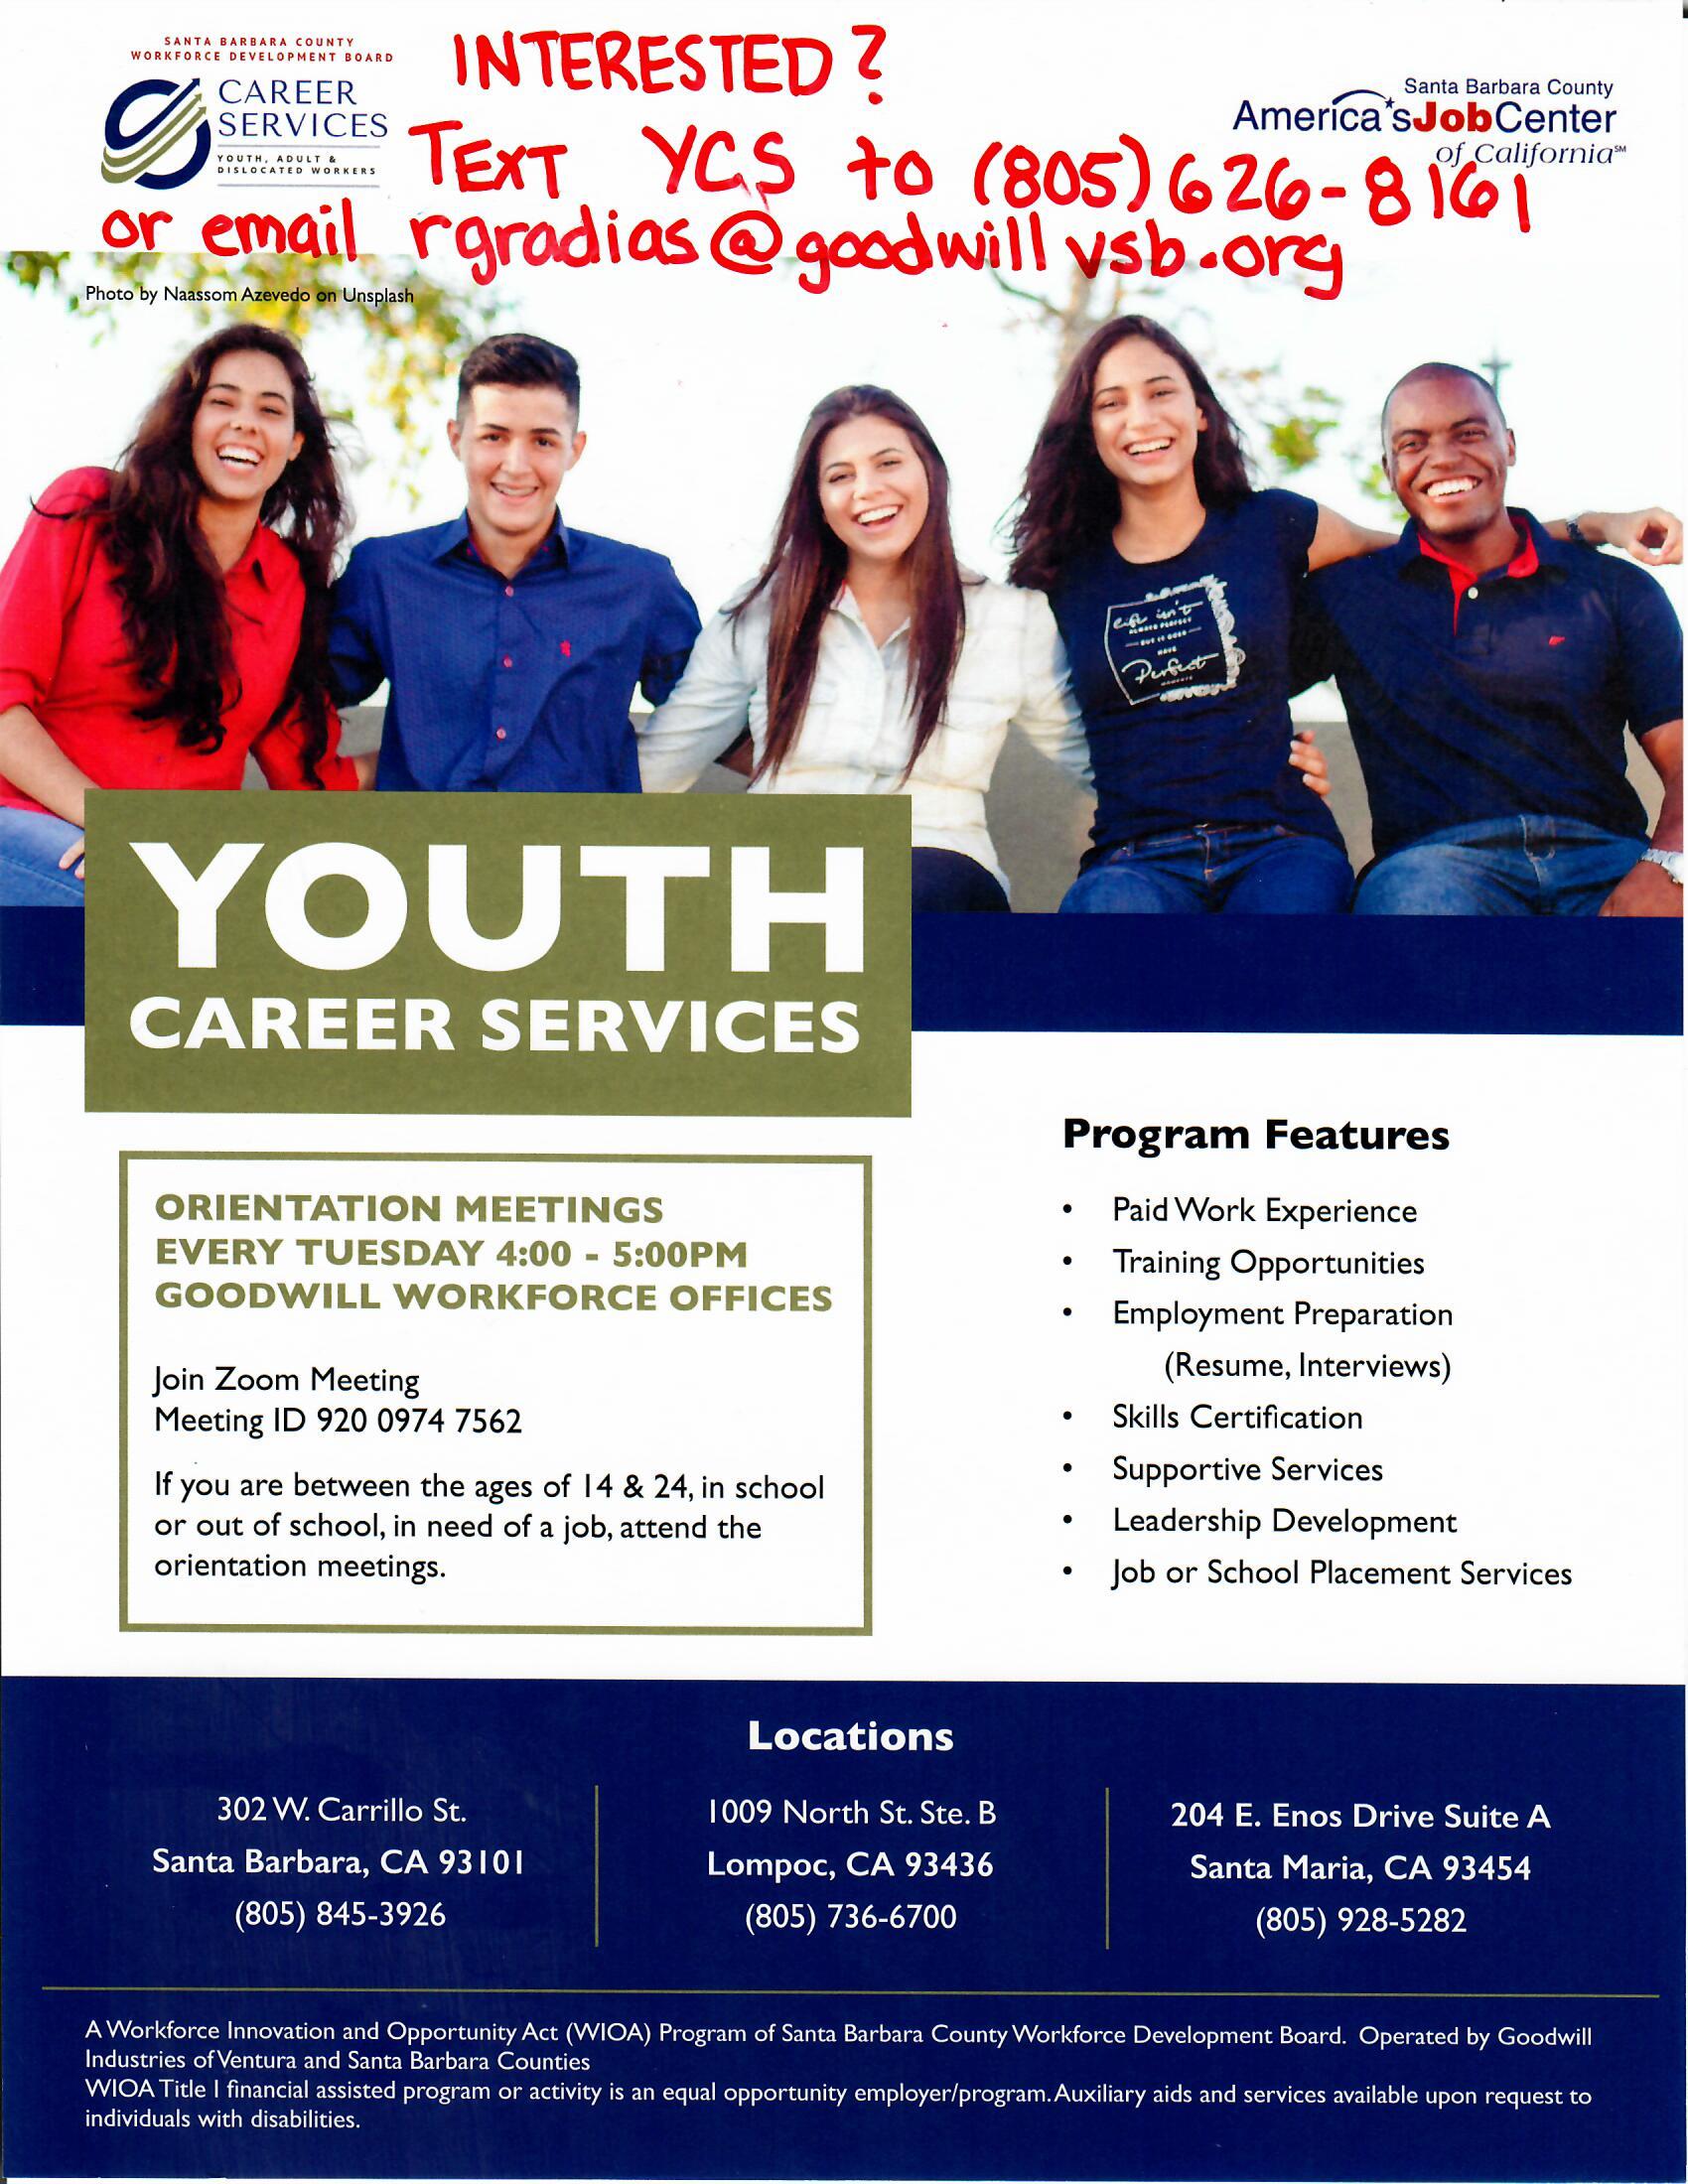 Goodwill Career Services Program